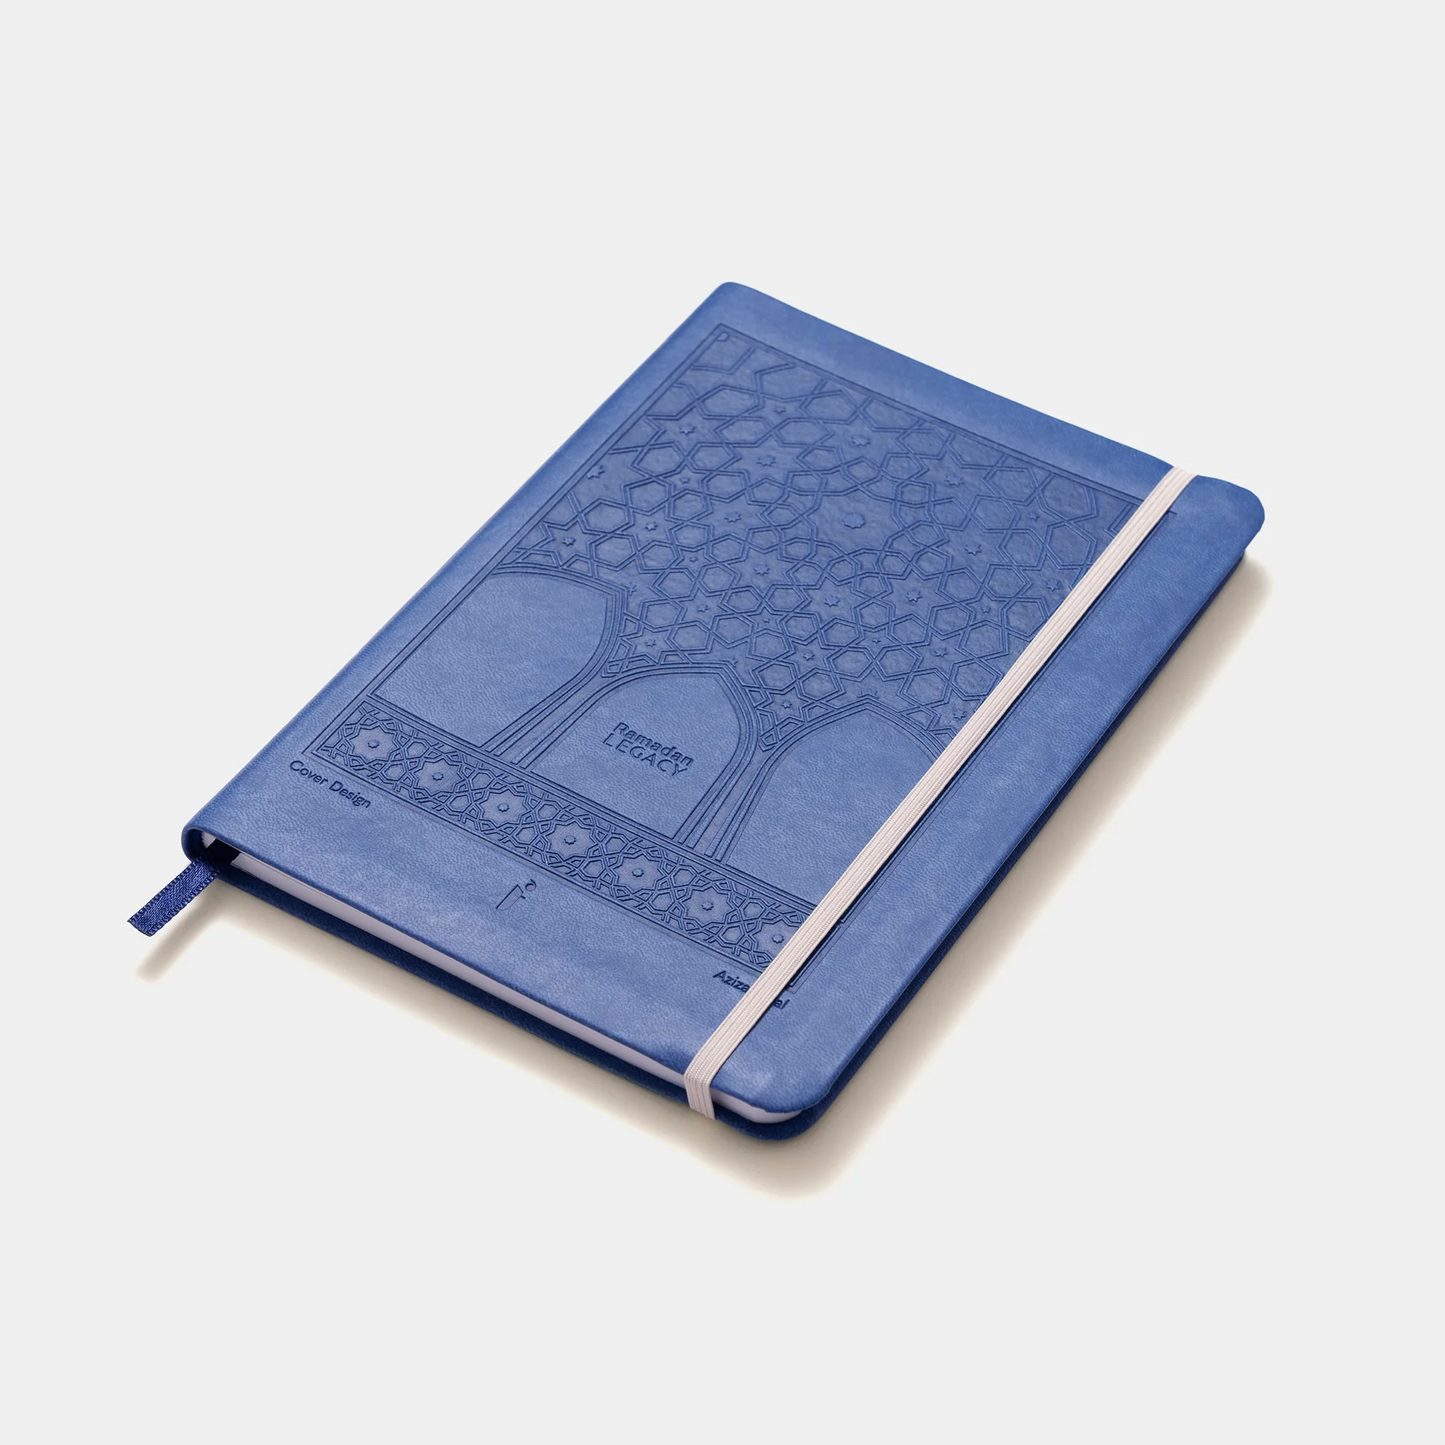 Ramadan Legacy Planner Luxury Gift Box: Planner & Engraved Pen - Night of Power Variant